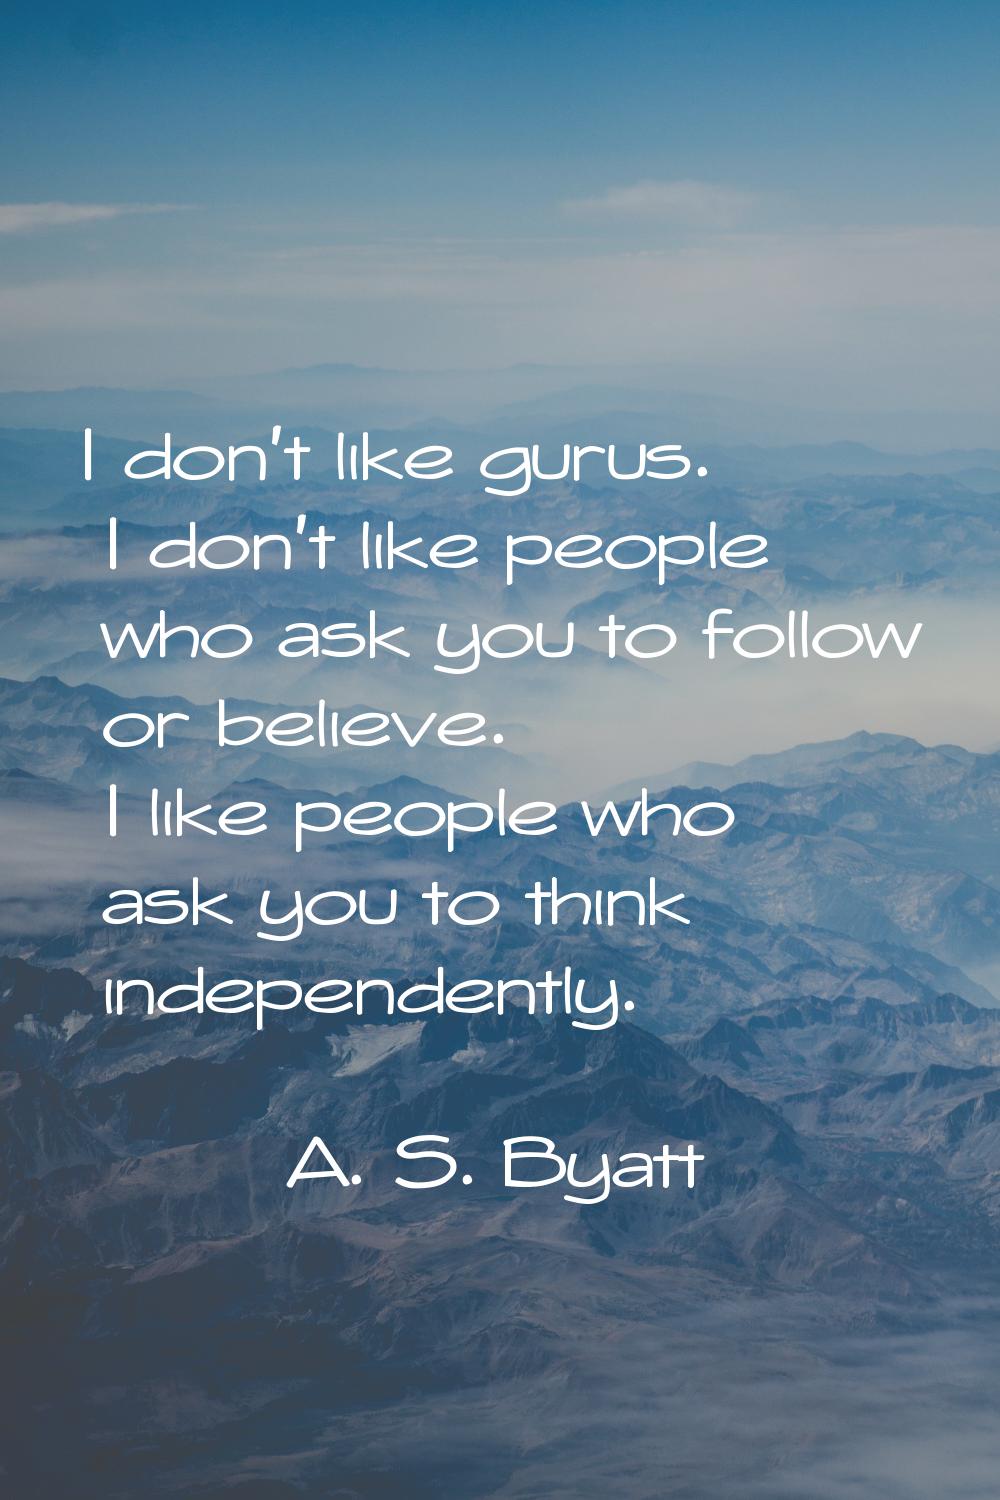 I don't like gurus. I don't like people who ask you to follow or believe. I like people who ask you